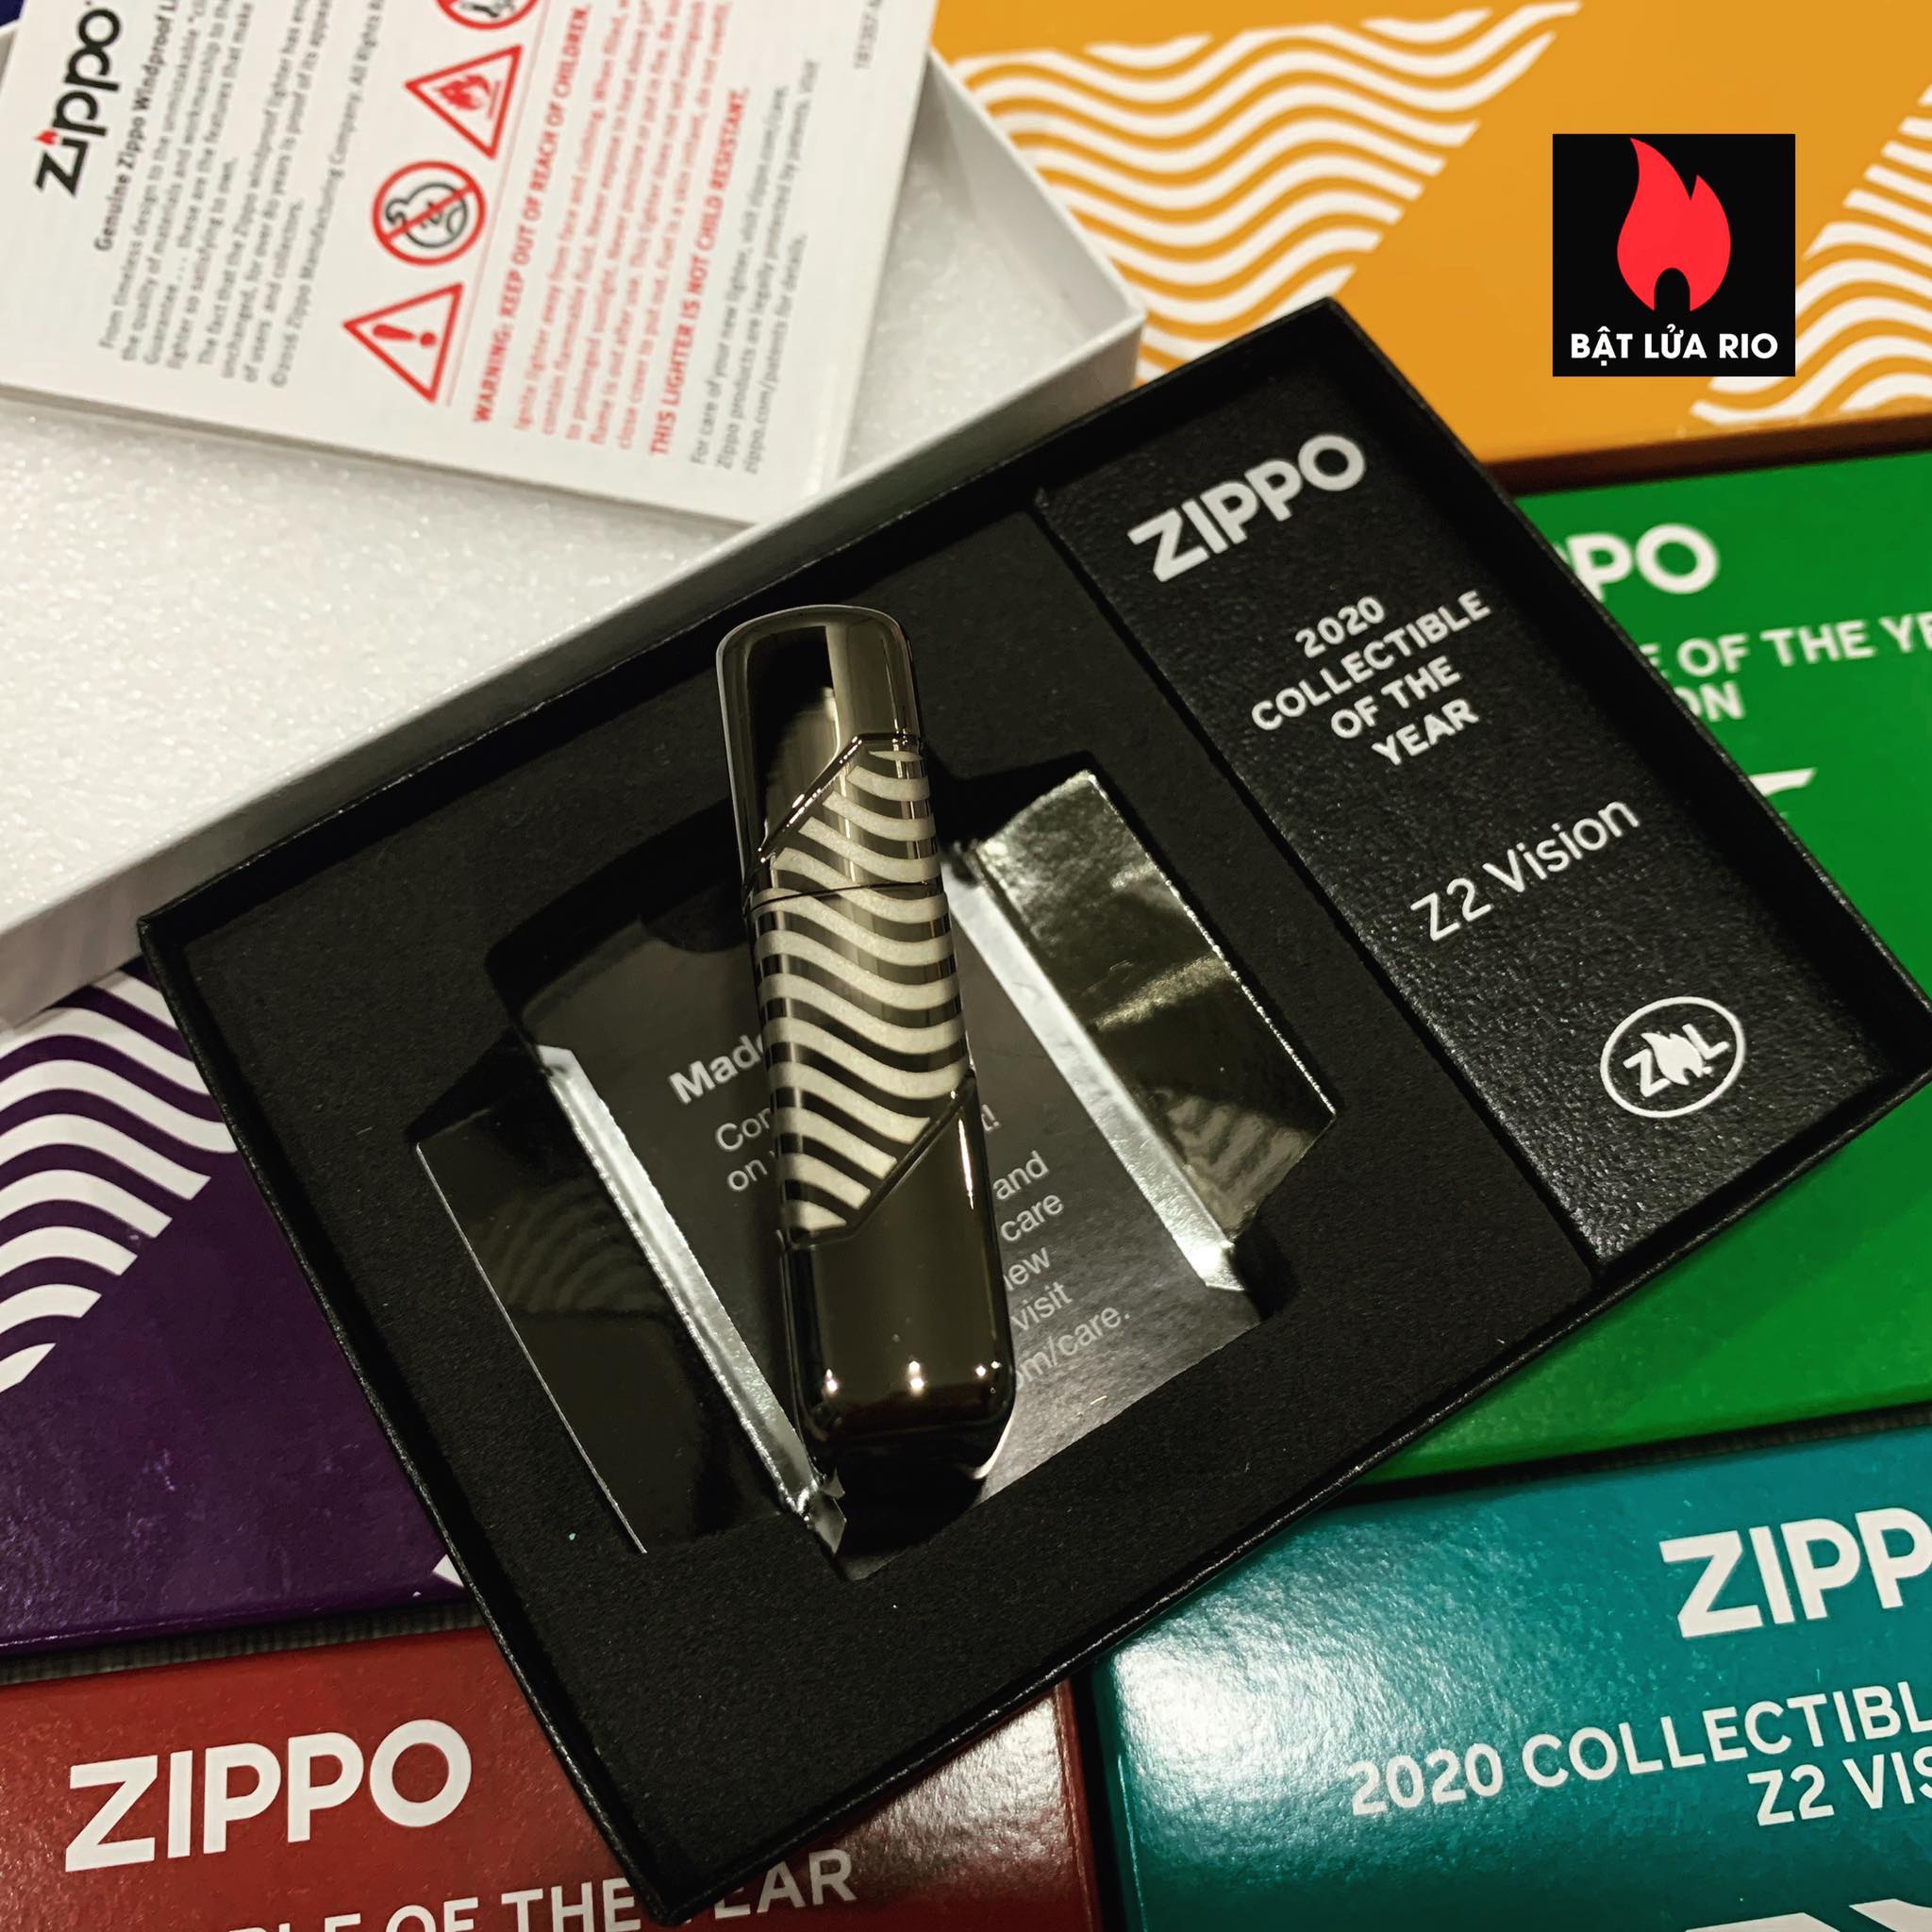 Zippo 49194 - Zippo 2020 Collectible Of The Year - Zippo Coty 2020 - Zippo Z2 Vision 26